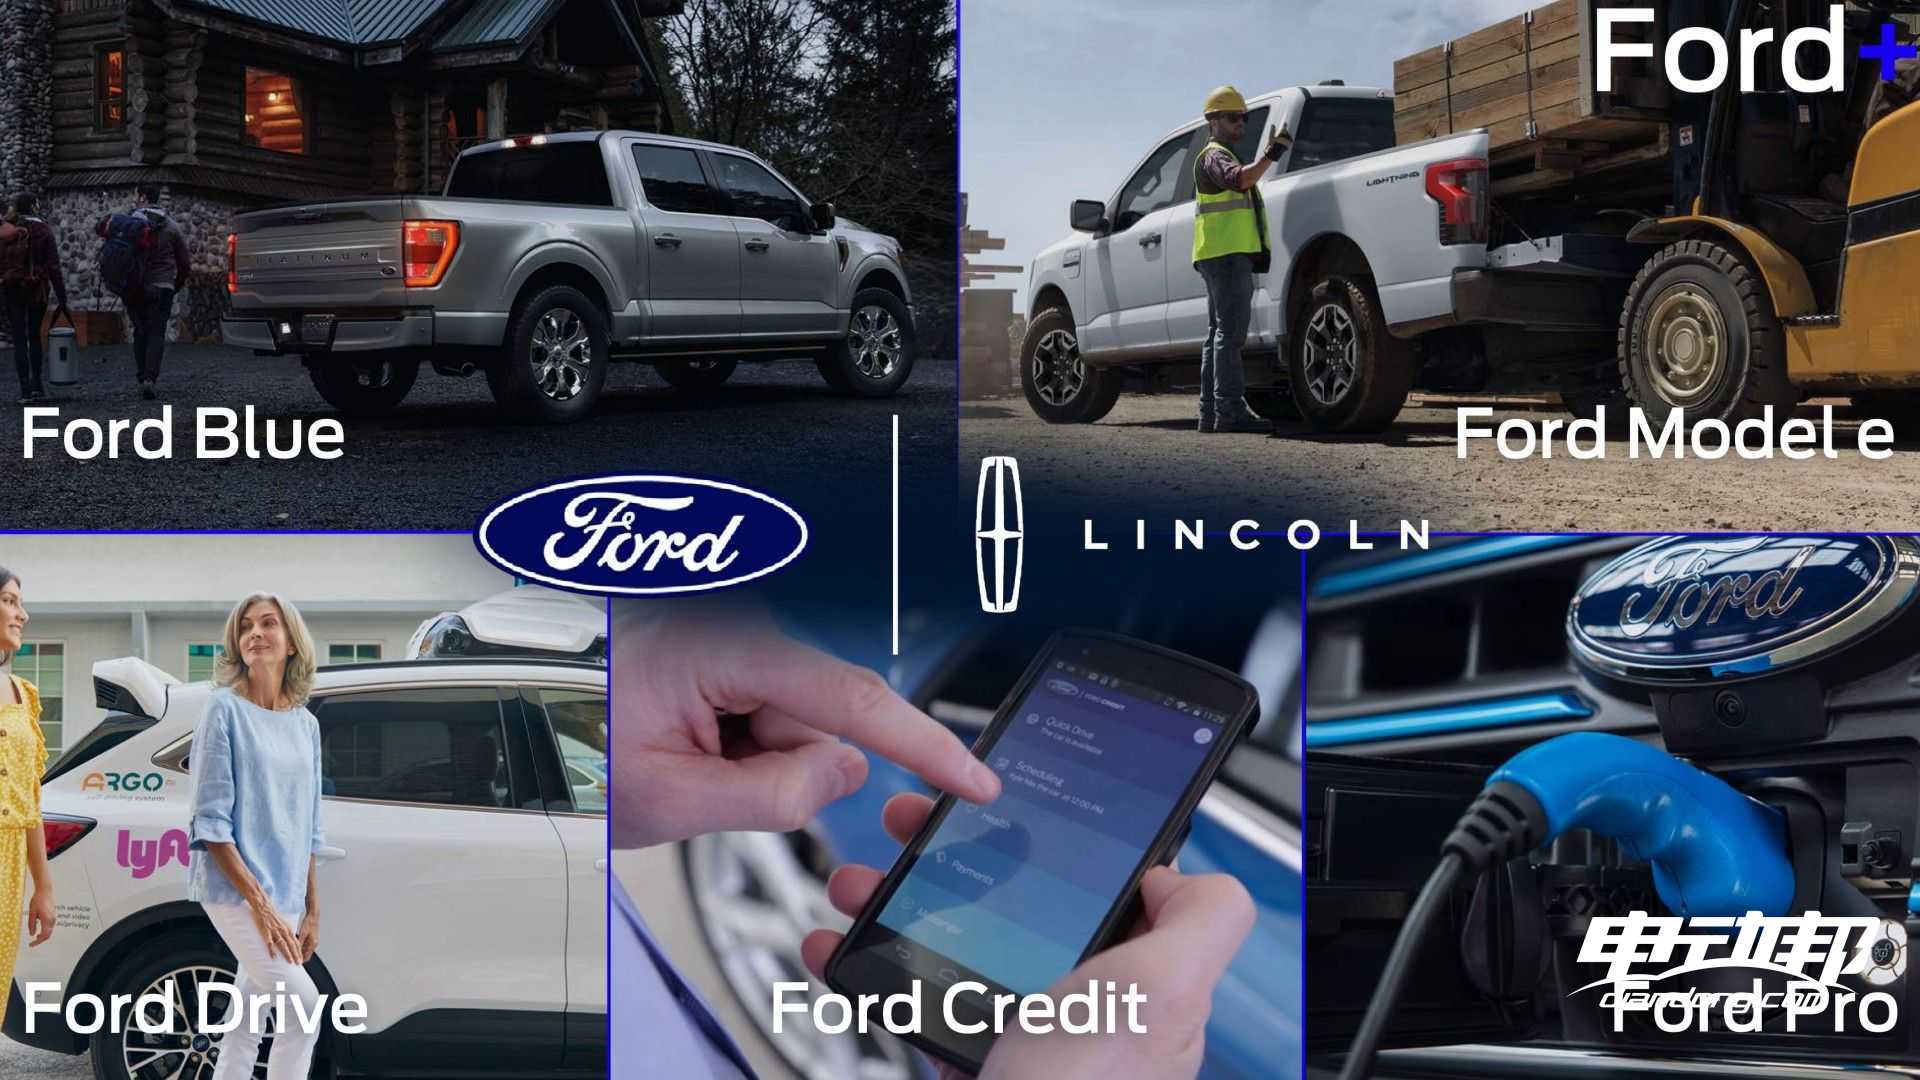 ford-motor-company-main-business-units.jpg